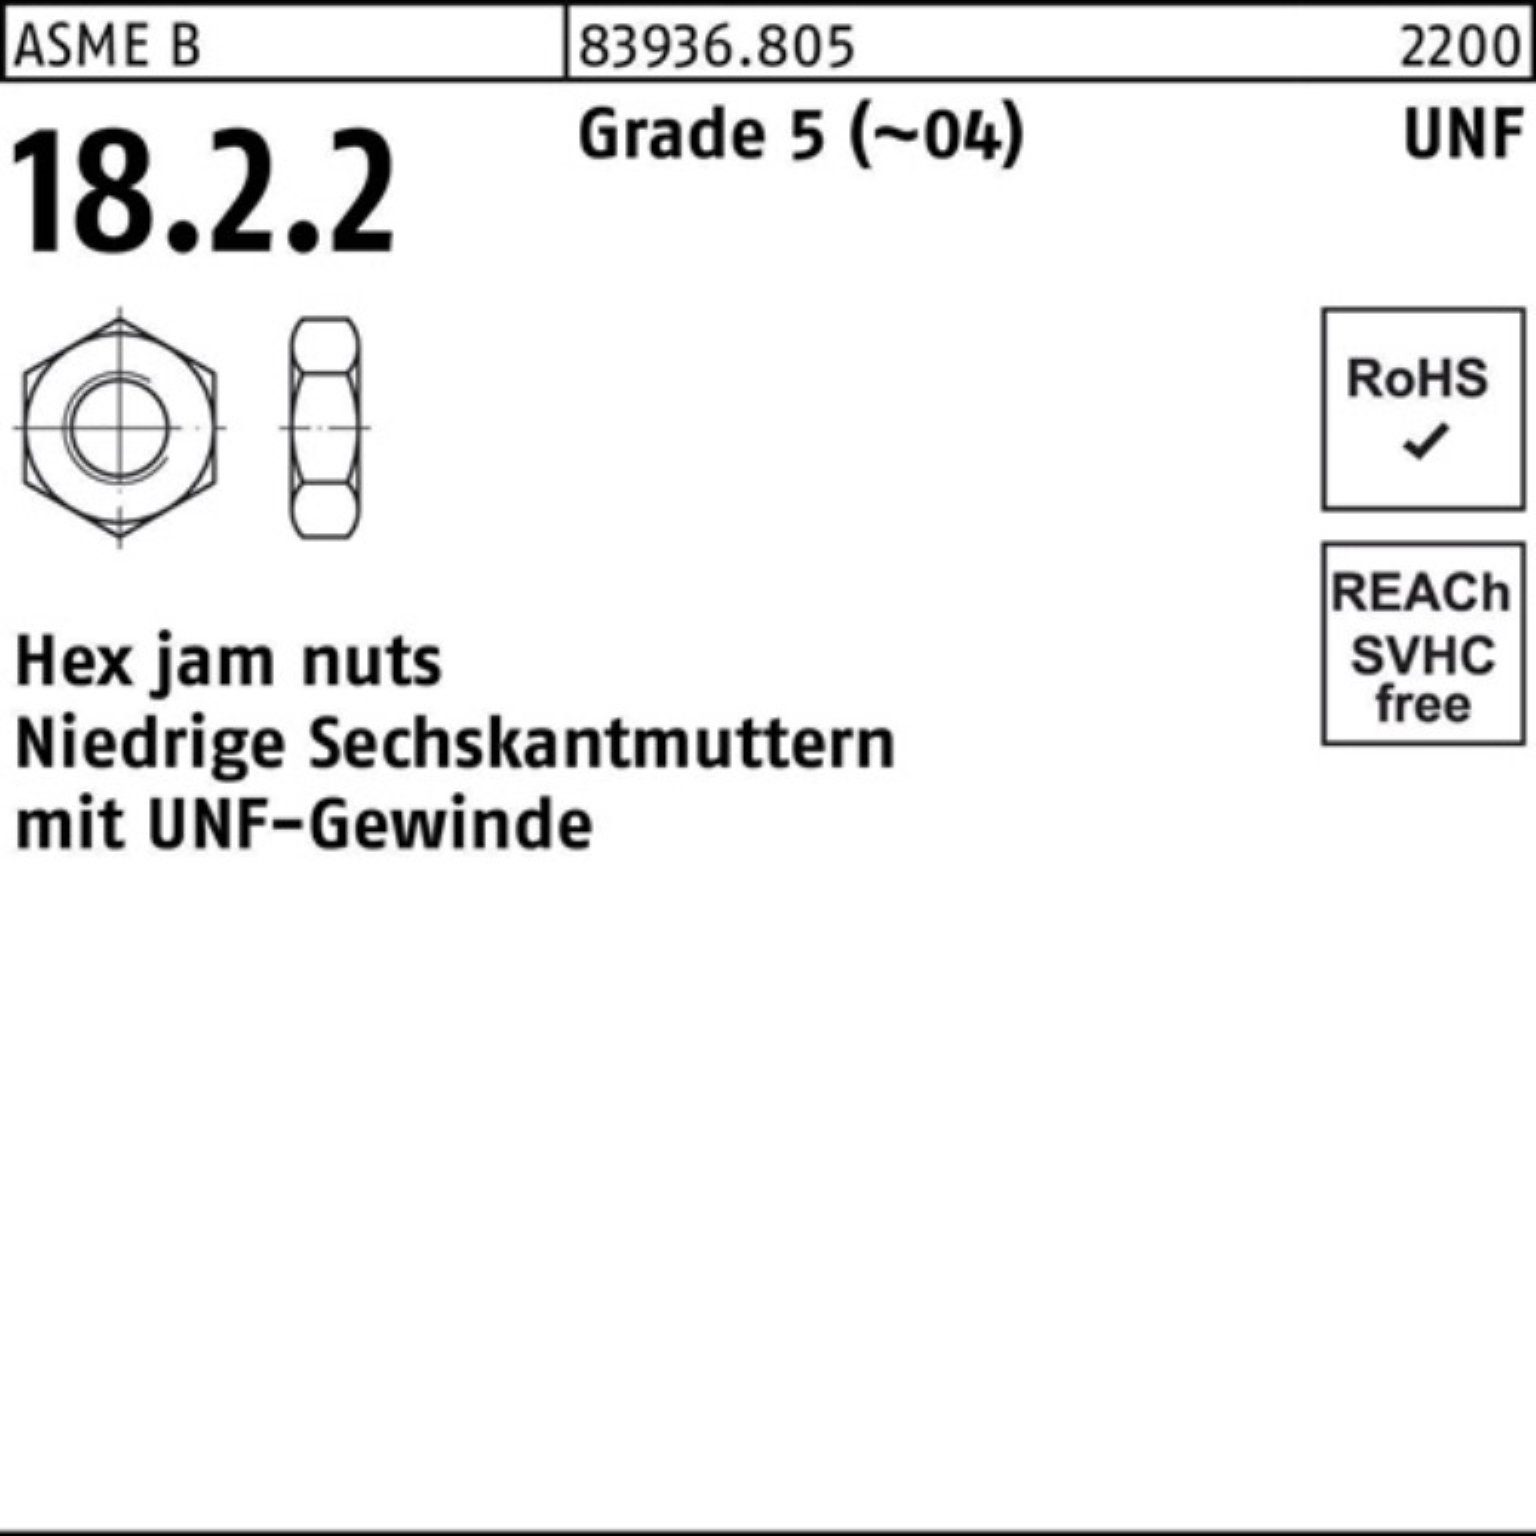 100er Grade Reyher Pack R Muttern niedrig Sechskantmutter 83936 UNF-Gewinde 5 1/4 (0